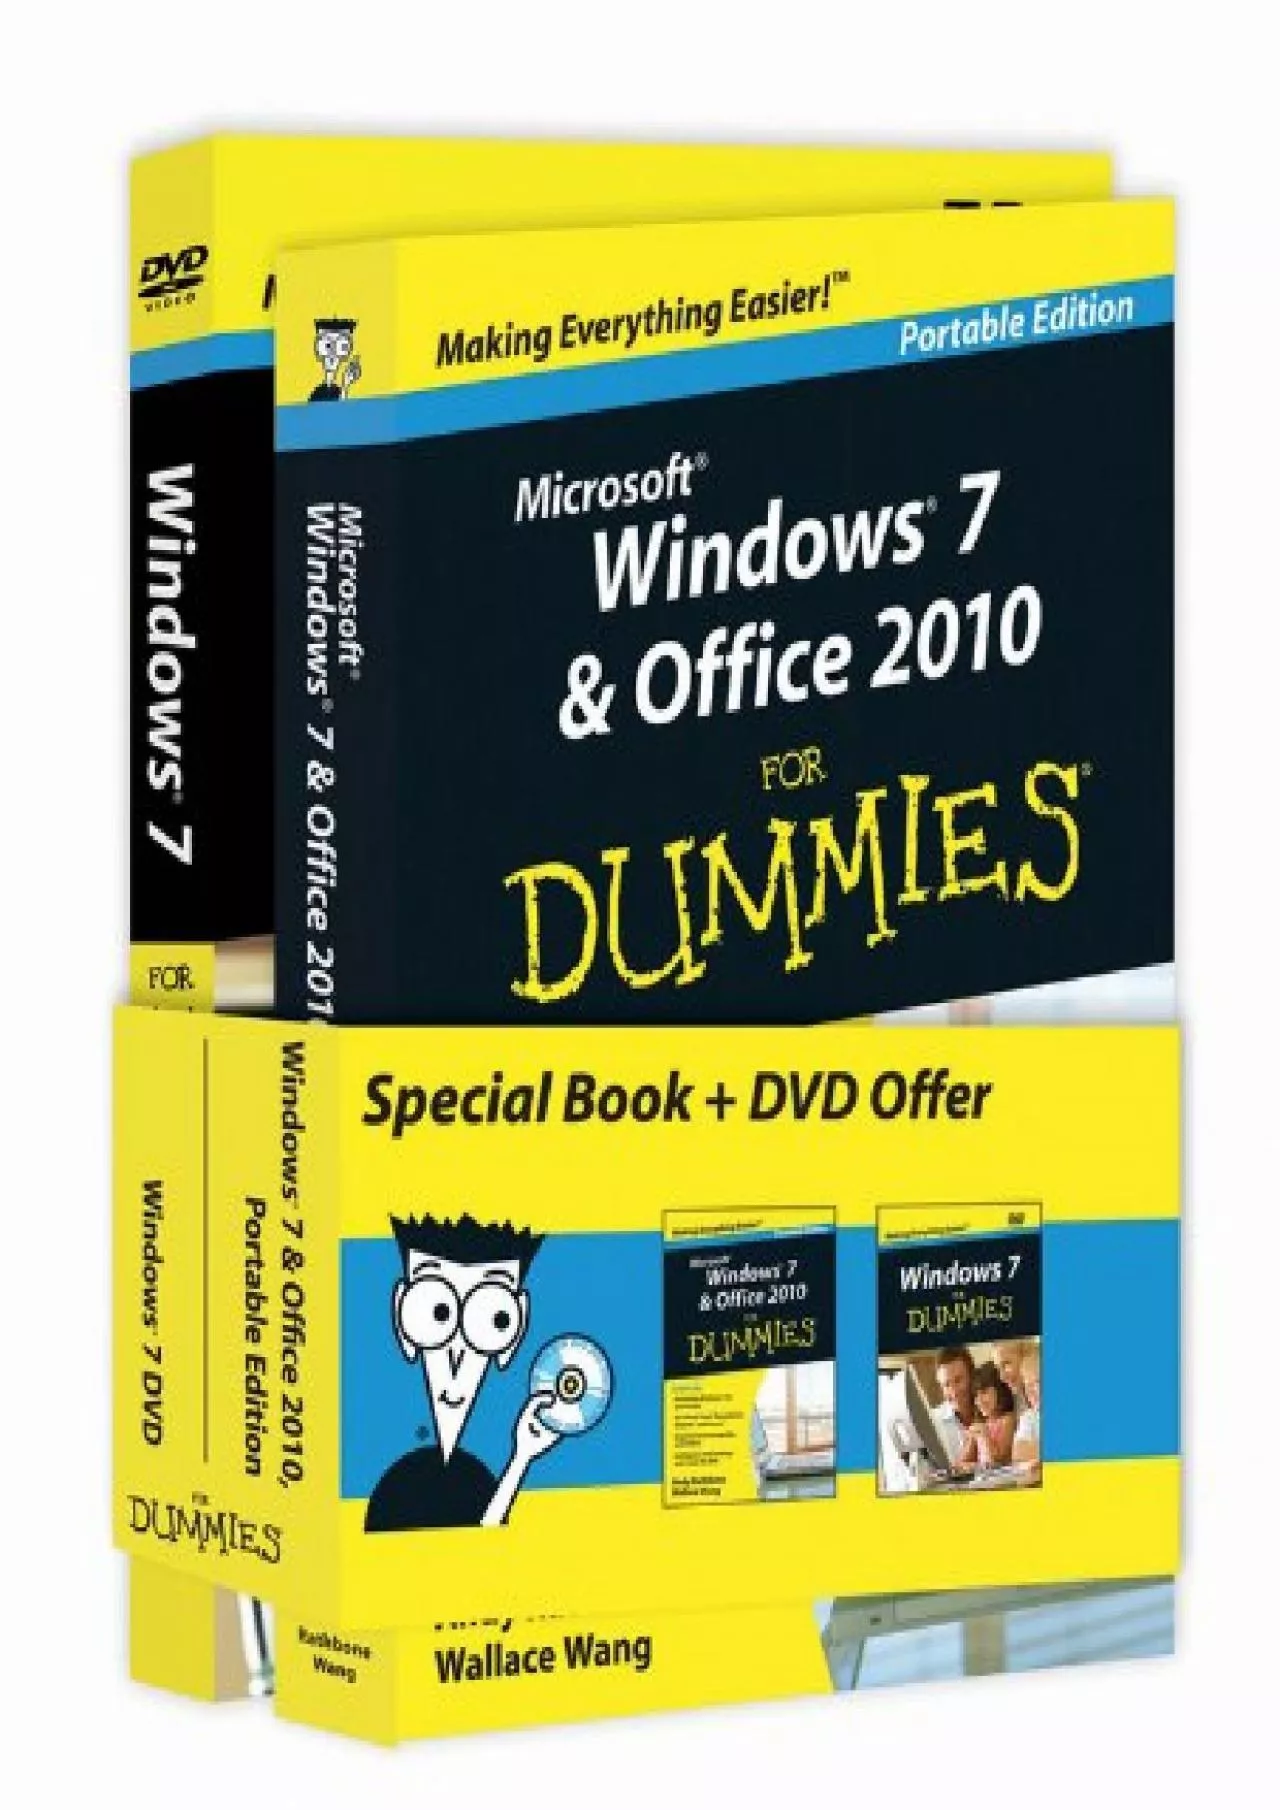 (READ)-Windows 7  Office 2010 For Dummies - Portable Edition + Windows 7 For Dummies DVD